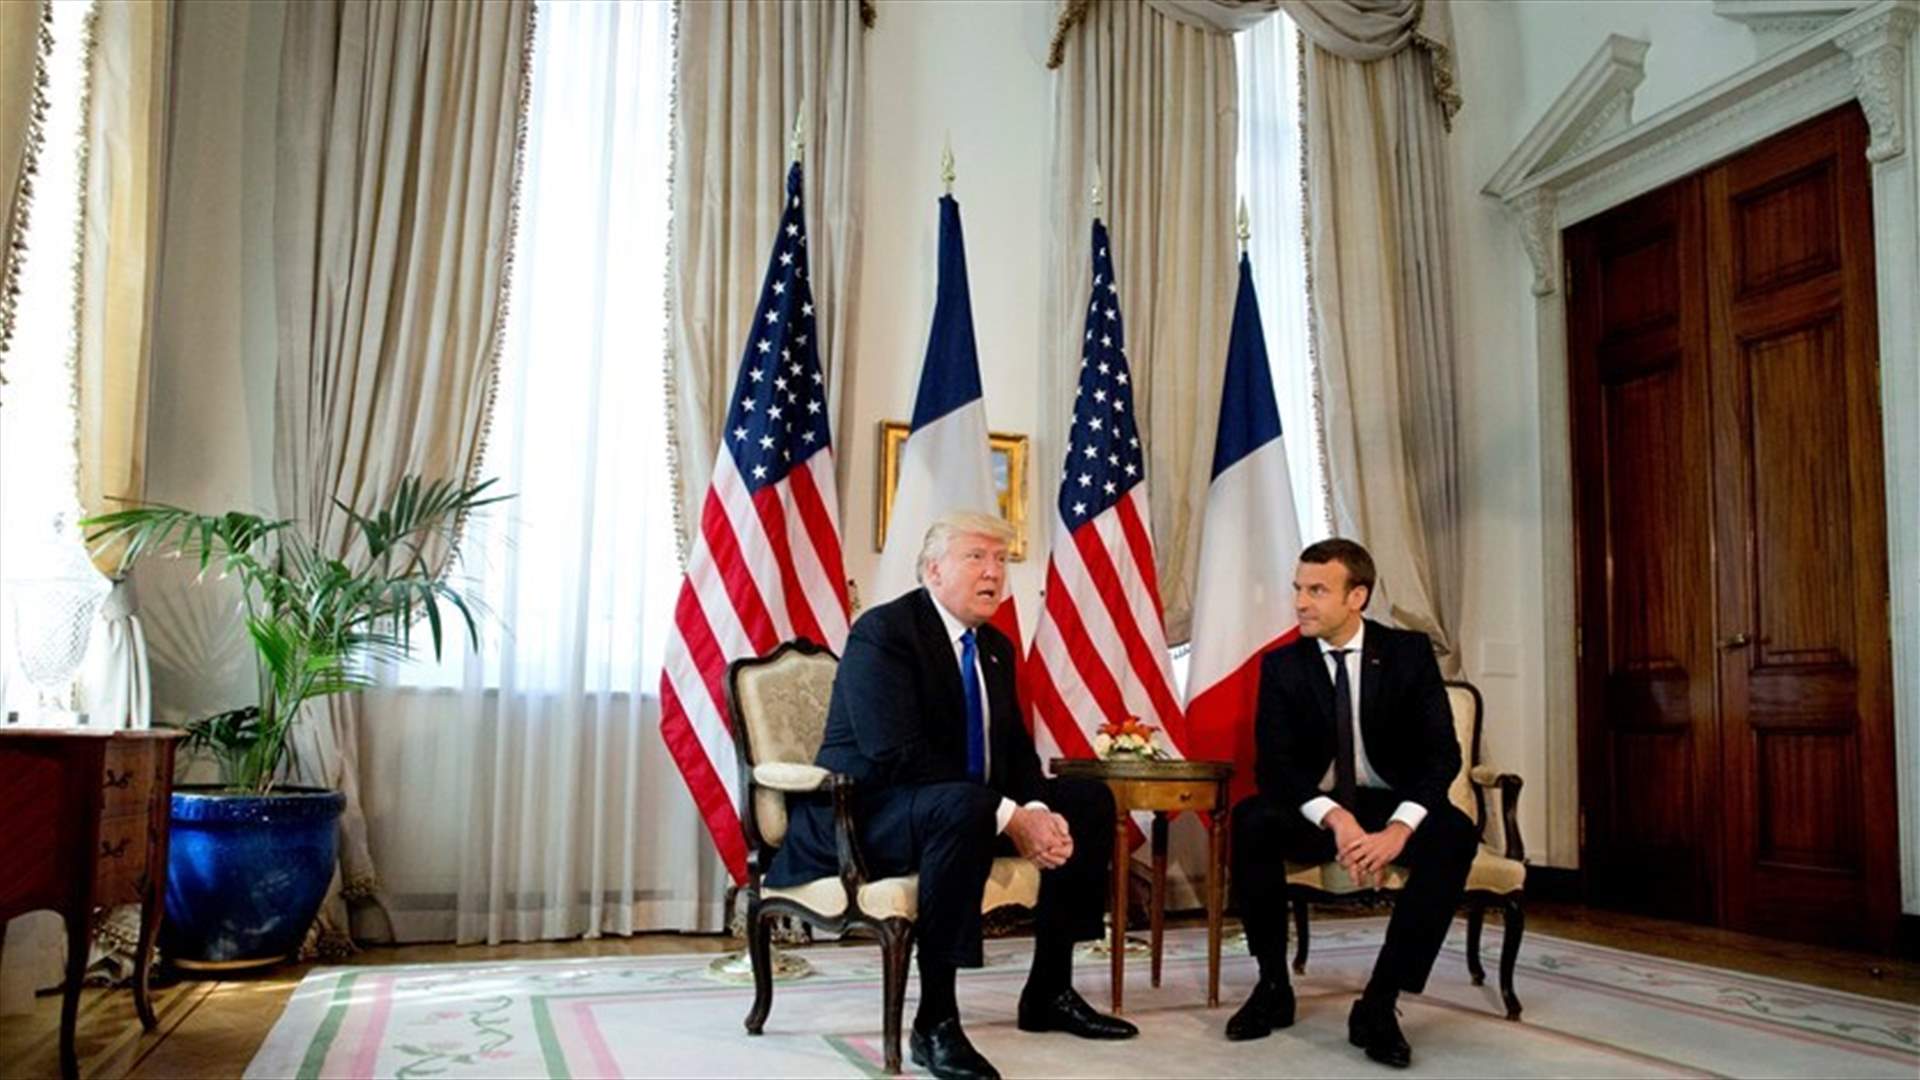 Trump, Macron engage in a little handshake diplomacy